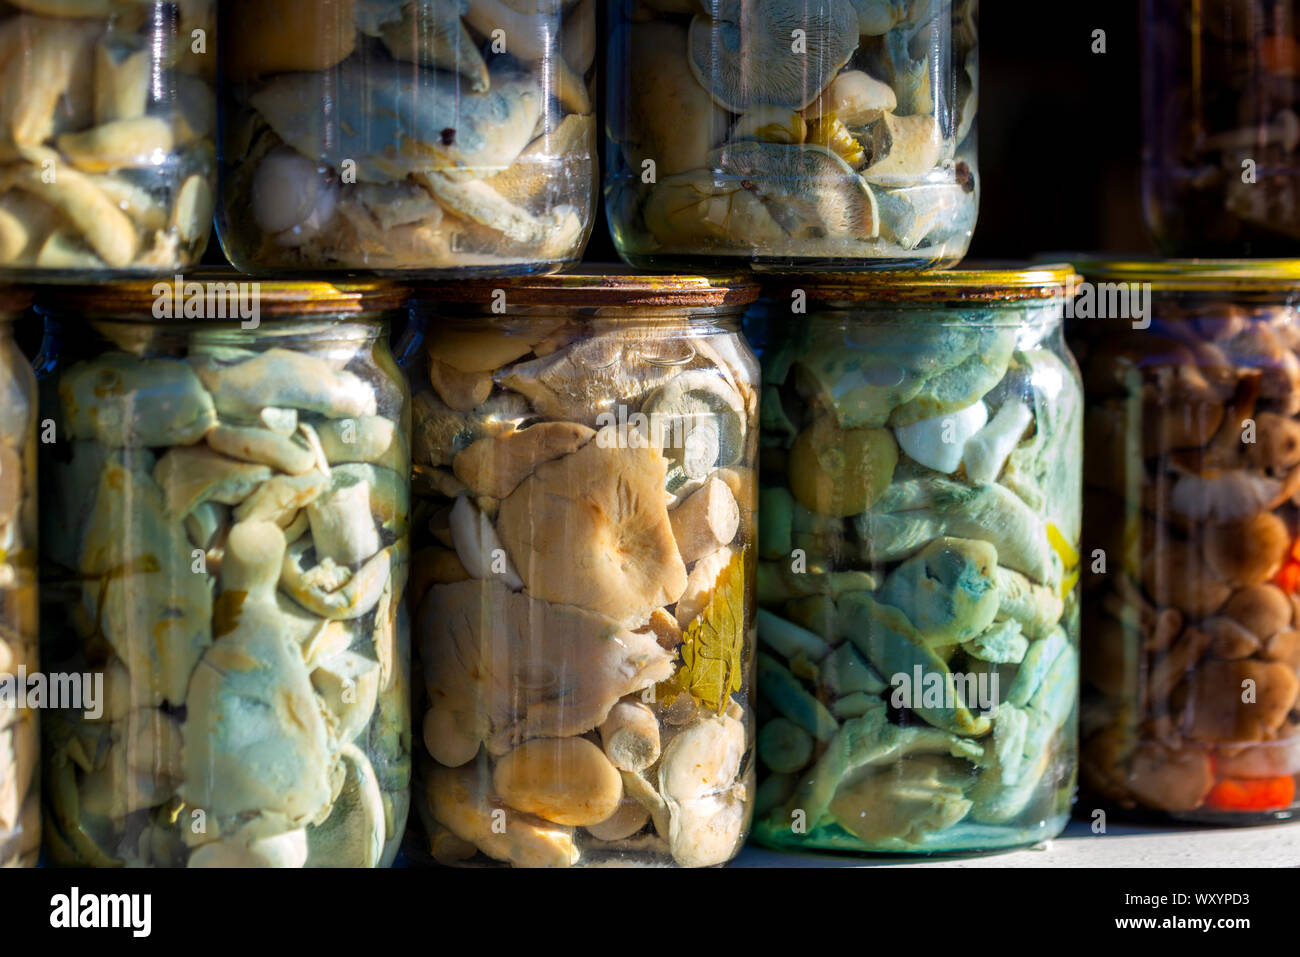 Pickled honey mushrooms in jars at village marketplace. Stock Photo